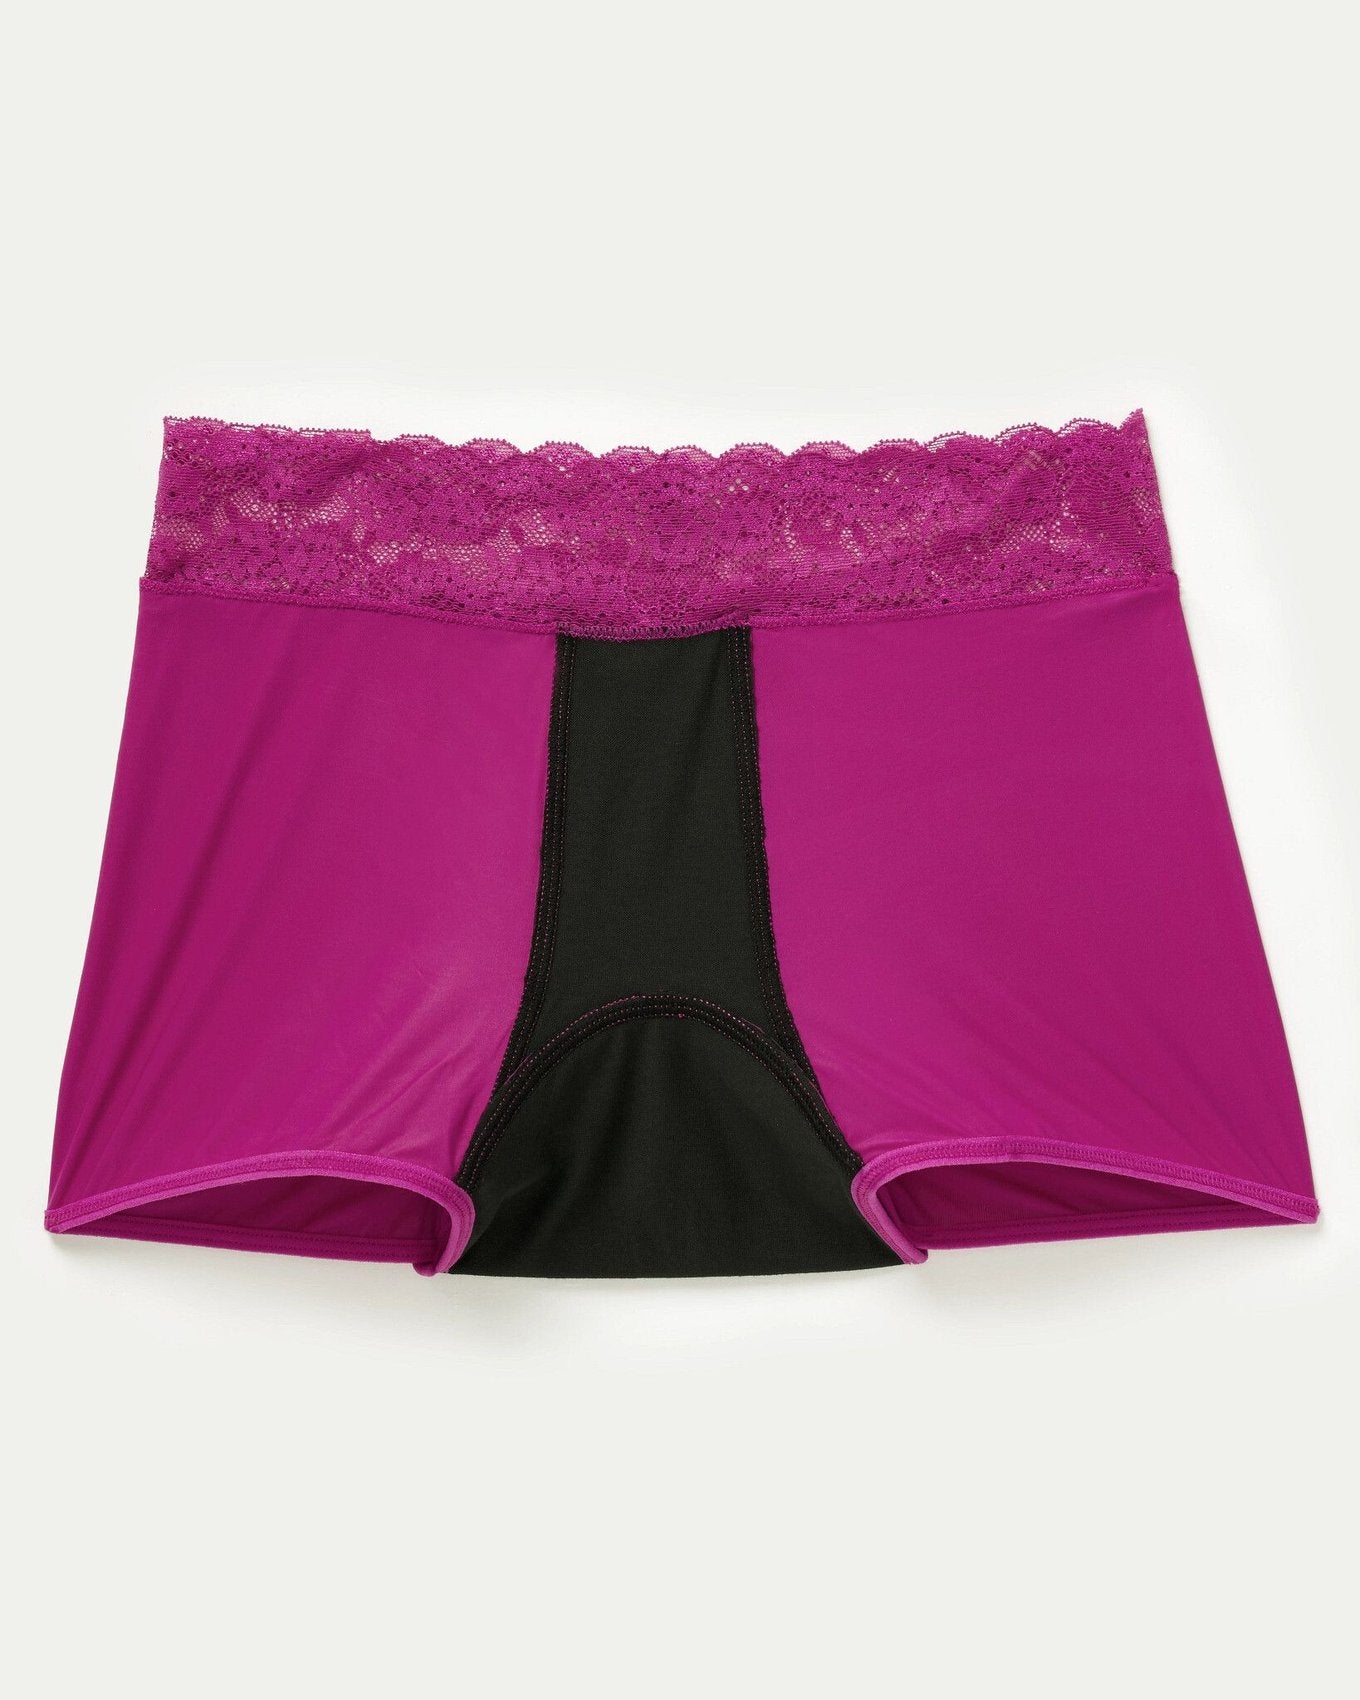 Joyja Emily period-proof panty in color Festival Fuchsia and shape shortie